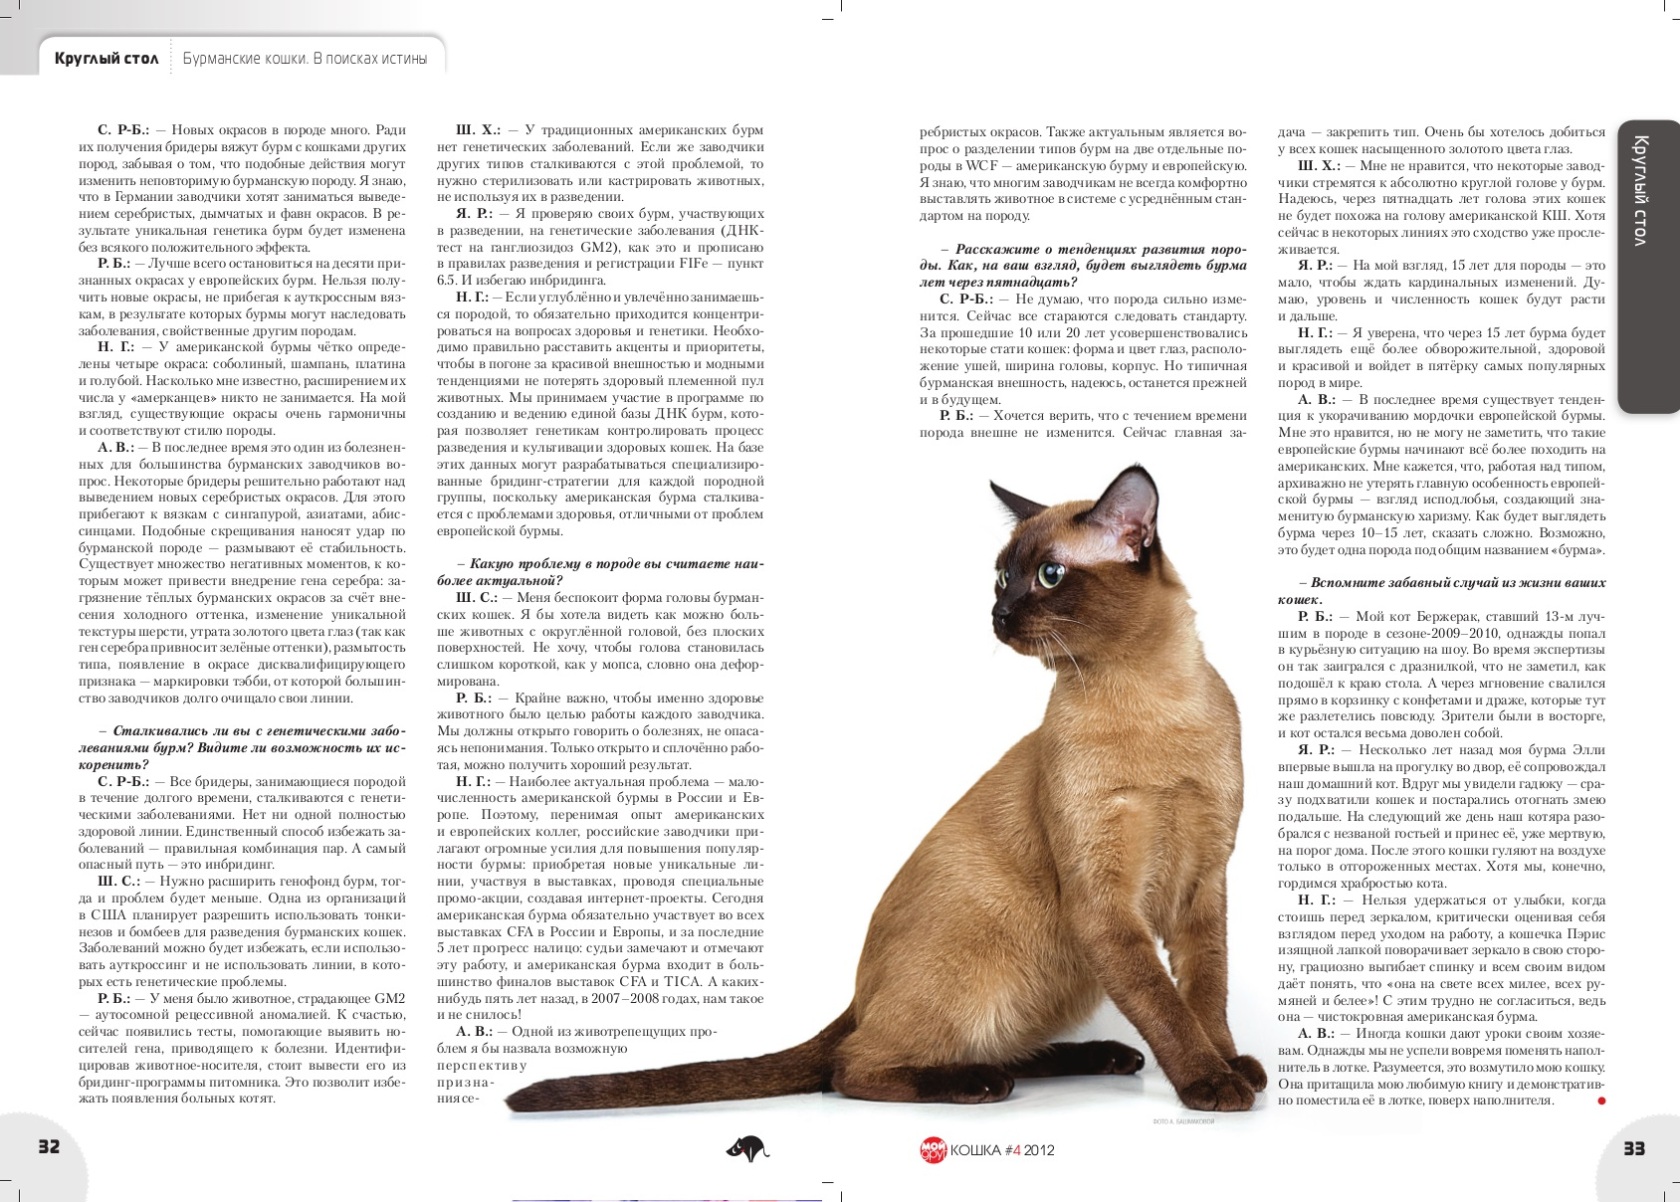 Бурманская кошка — плюсы и минусы